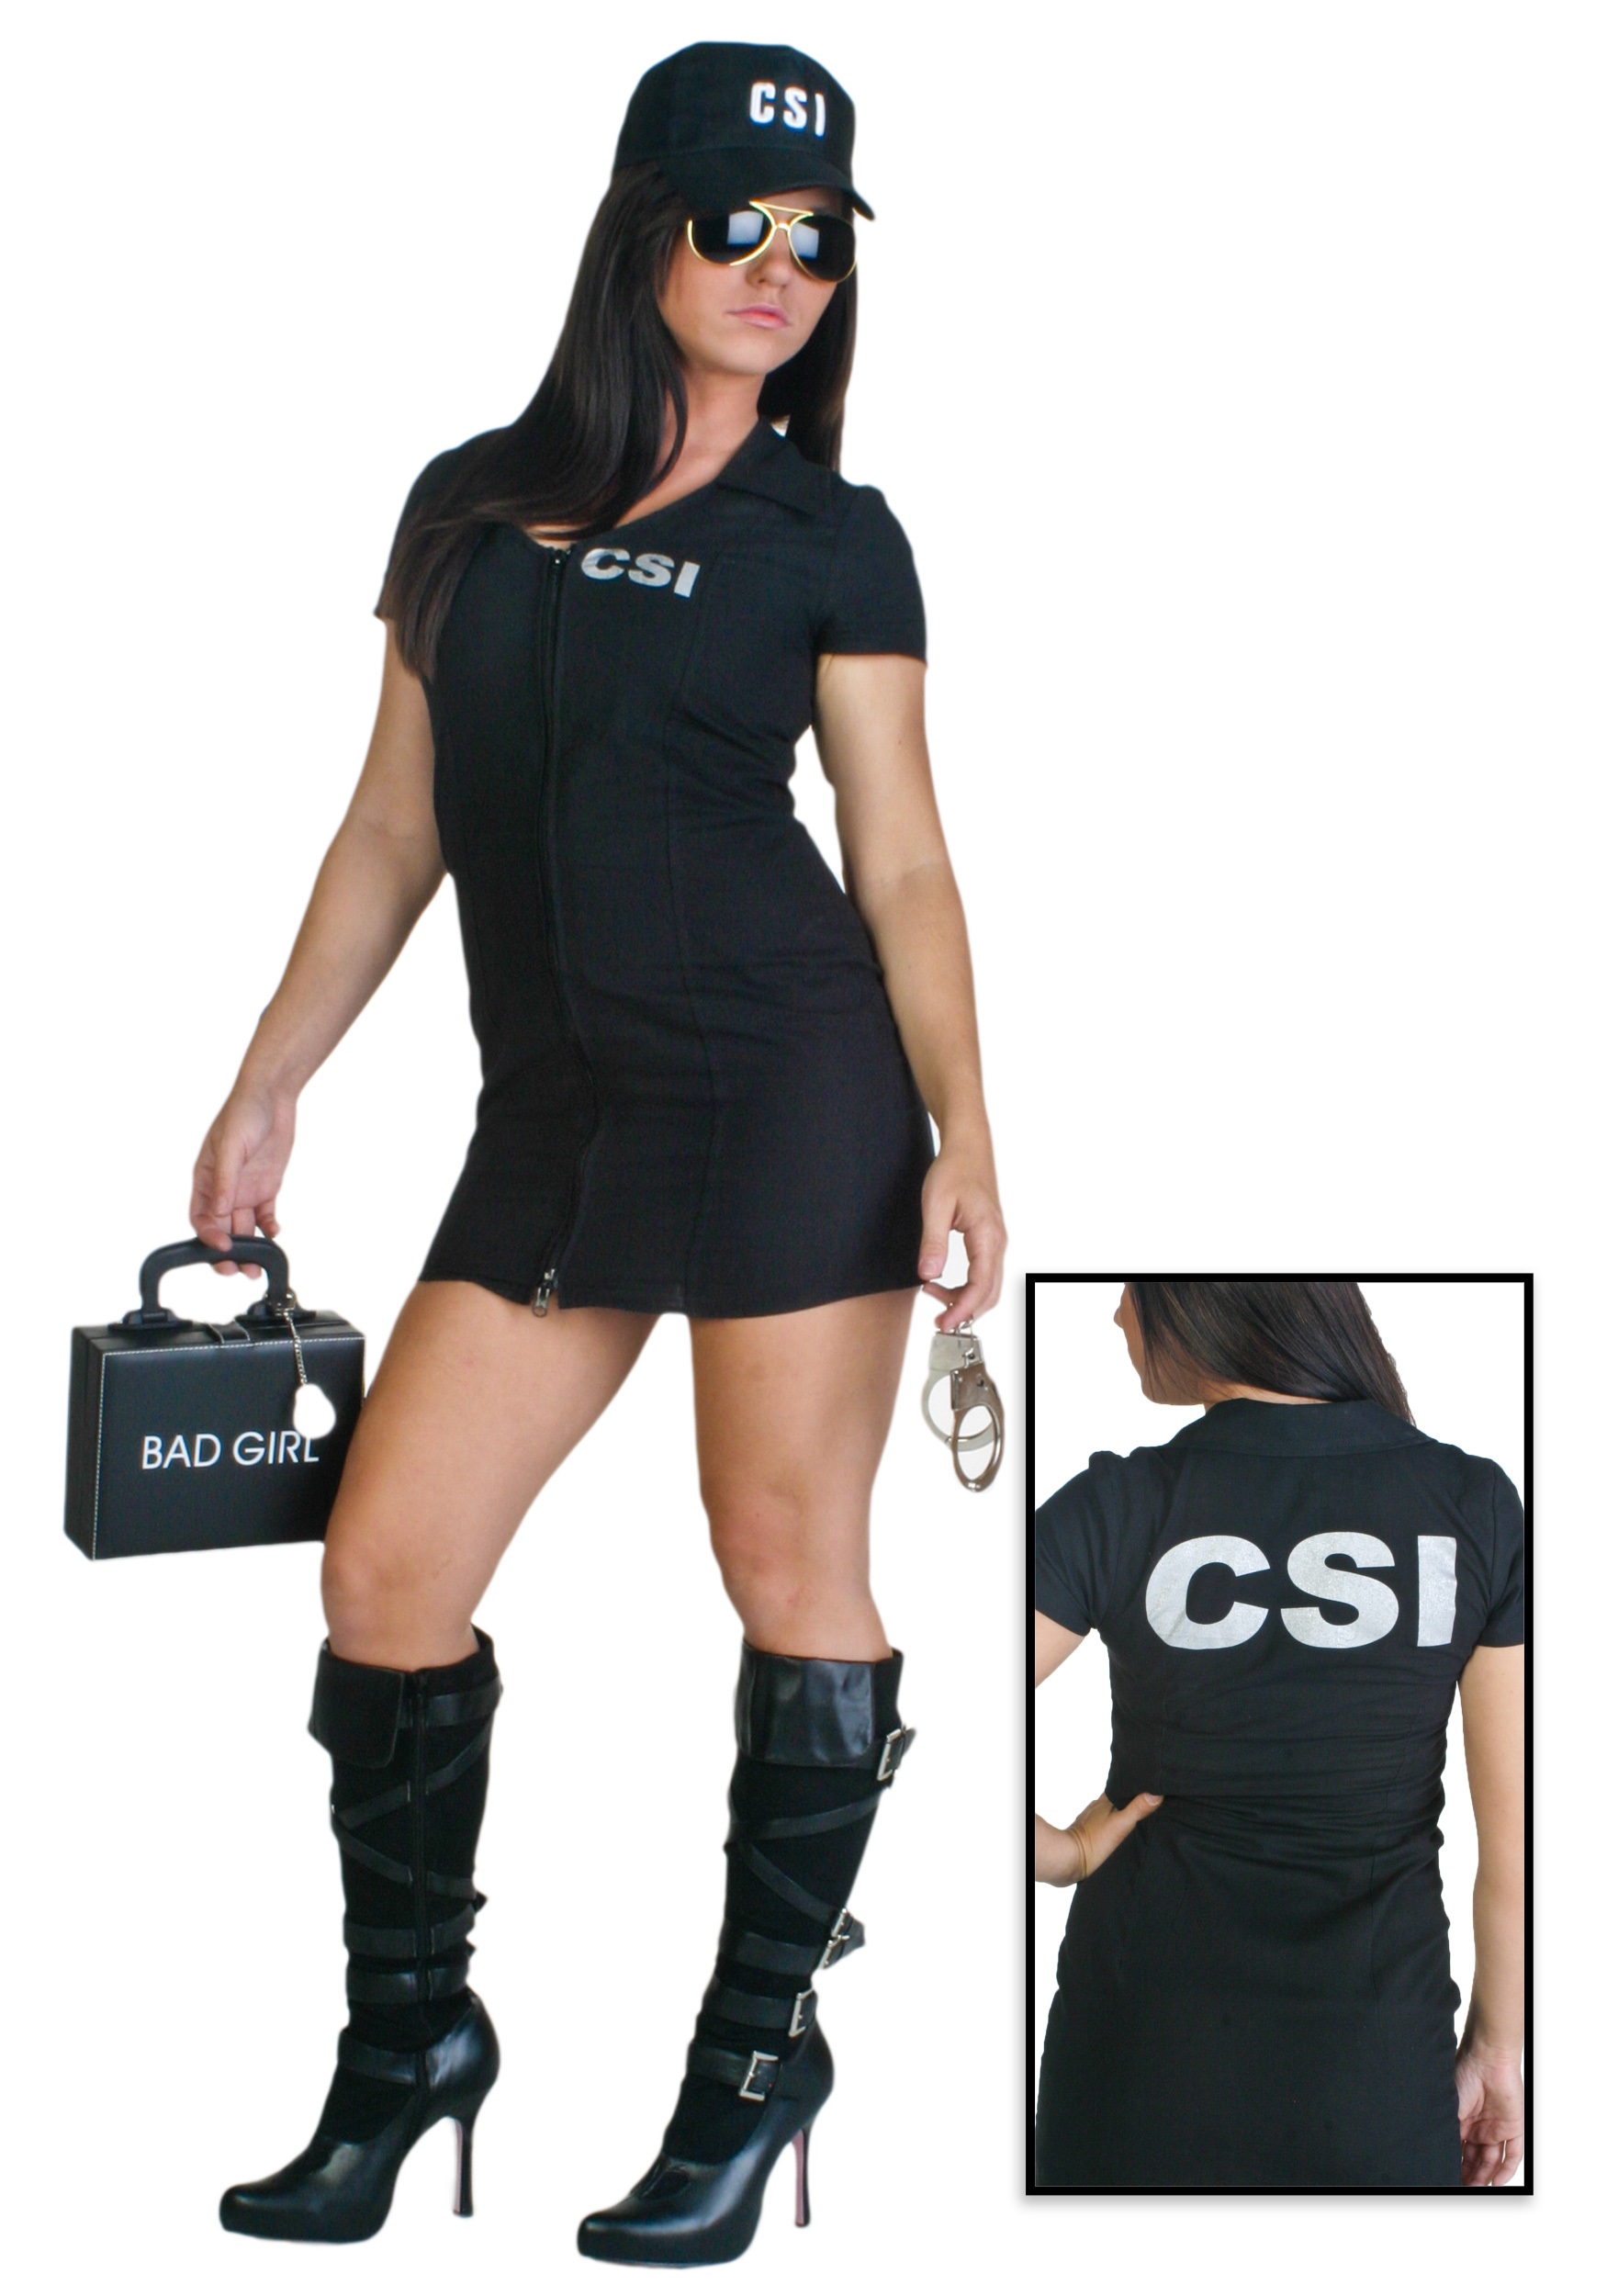 Women's Sexy CSI Costume Halloween Costume Ideas 2019